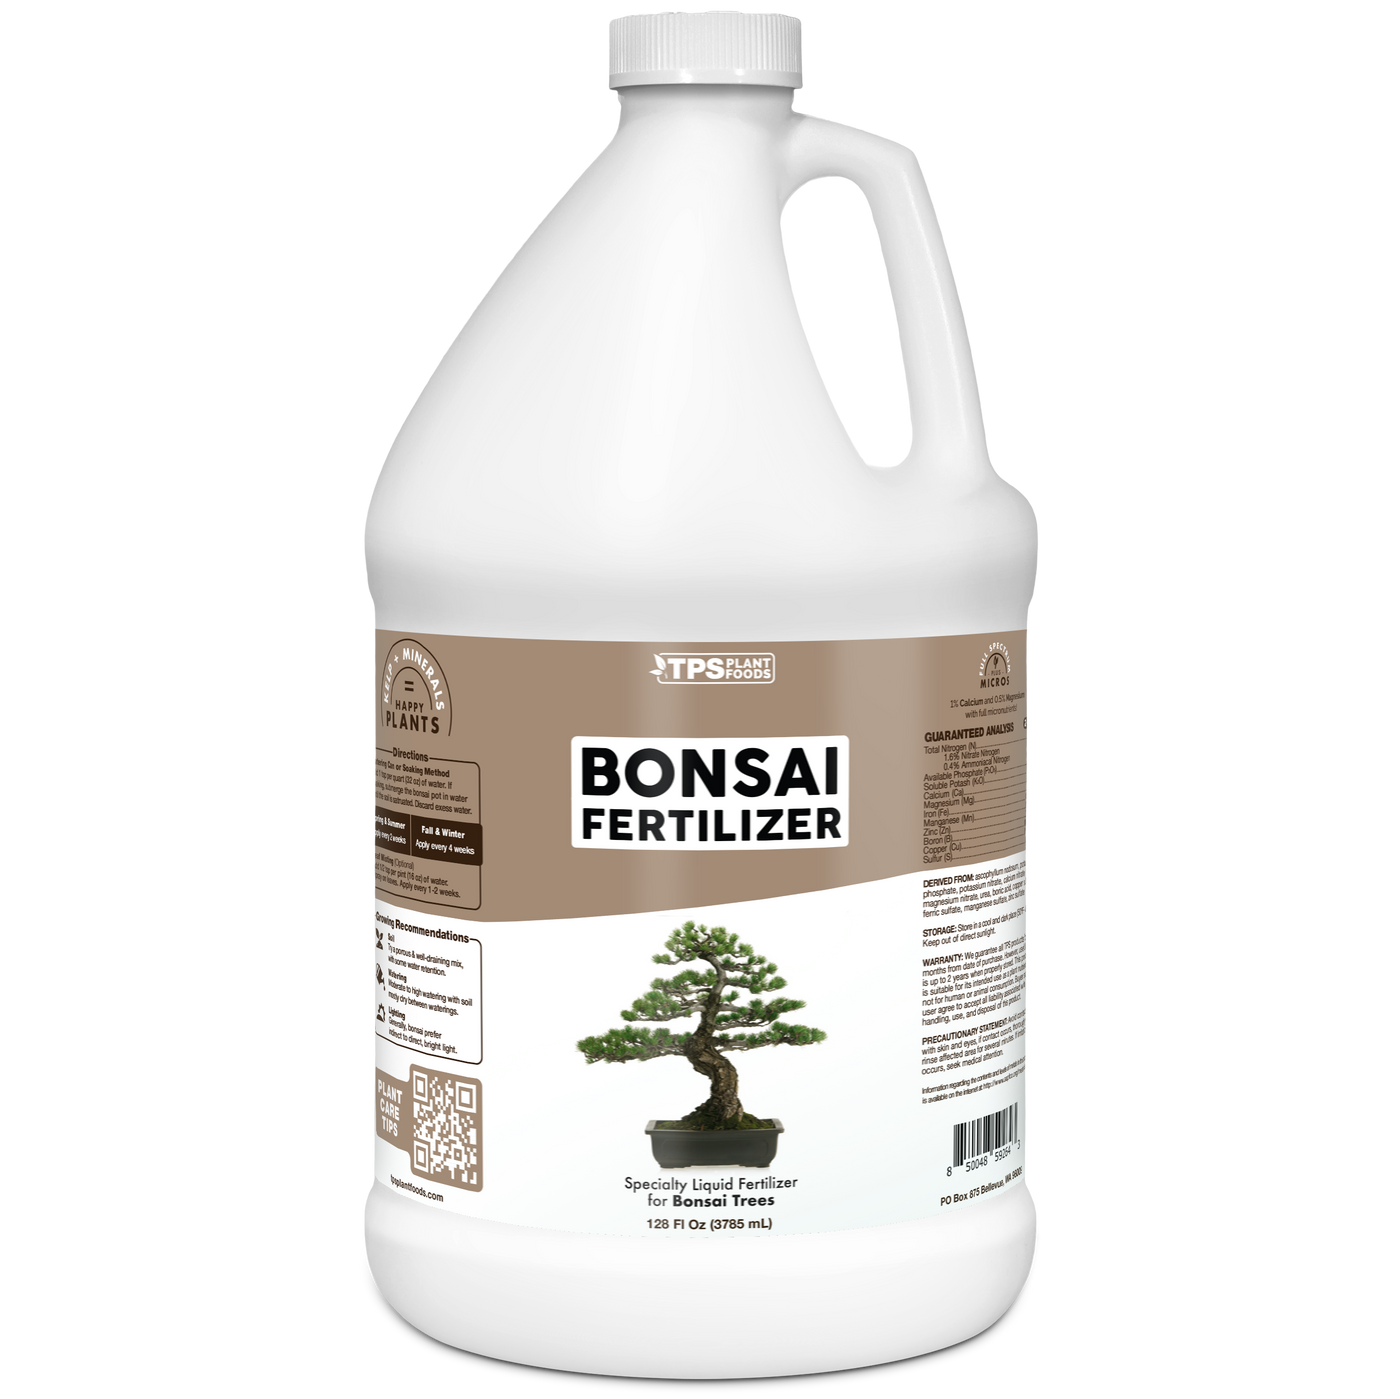 Bonsai Fertilizer